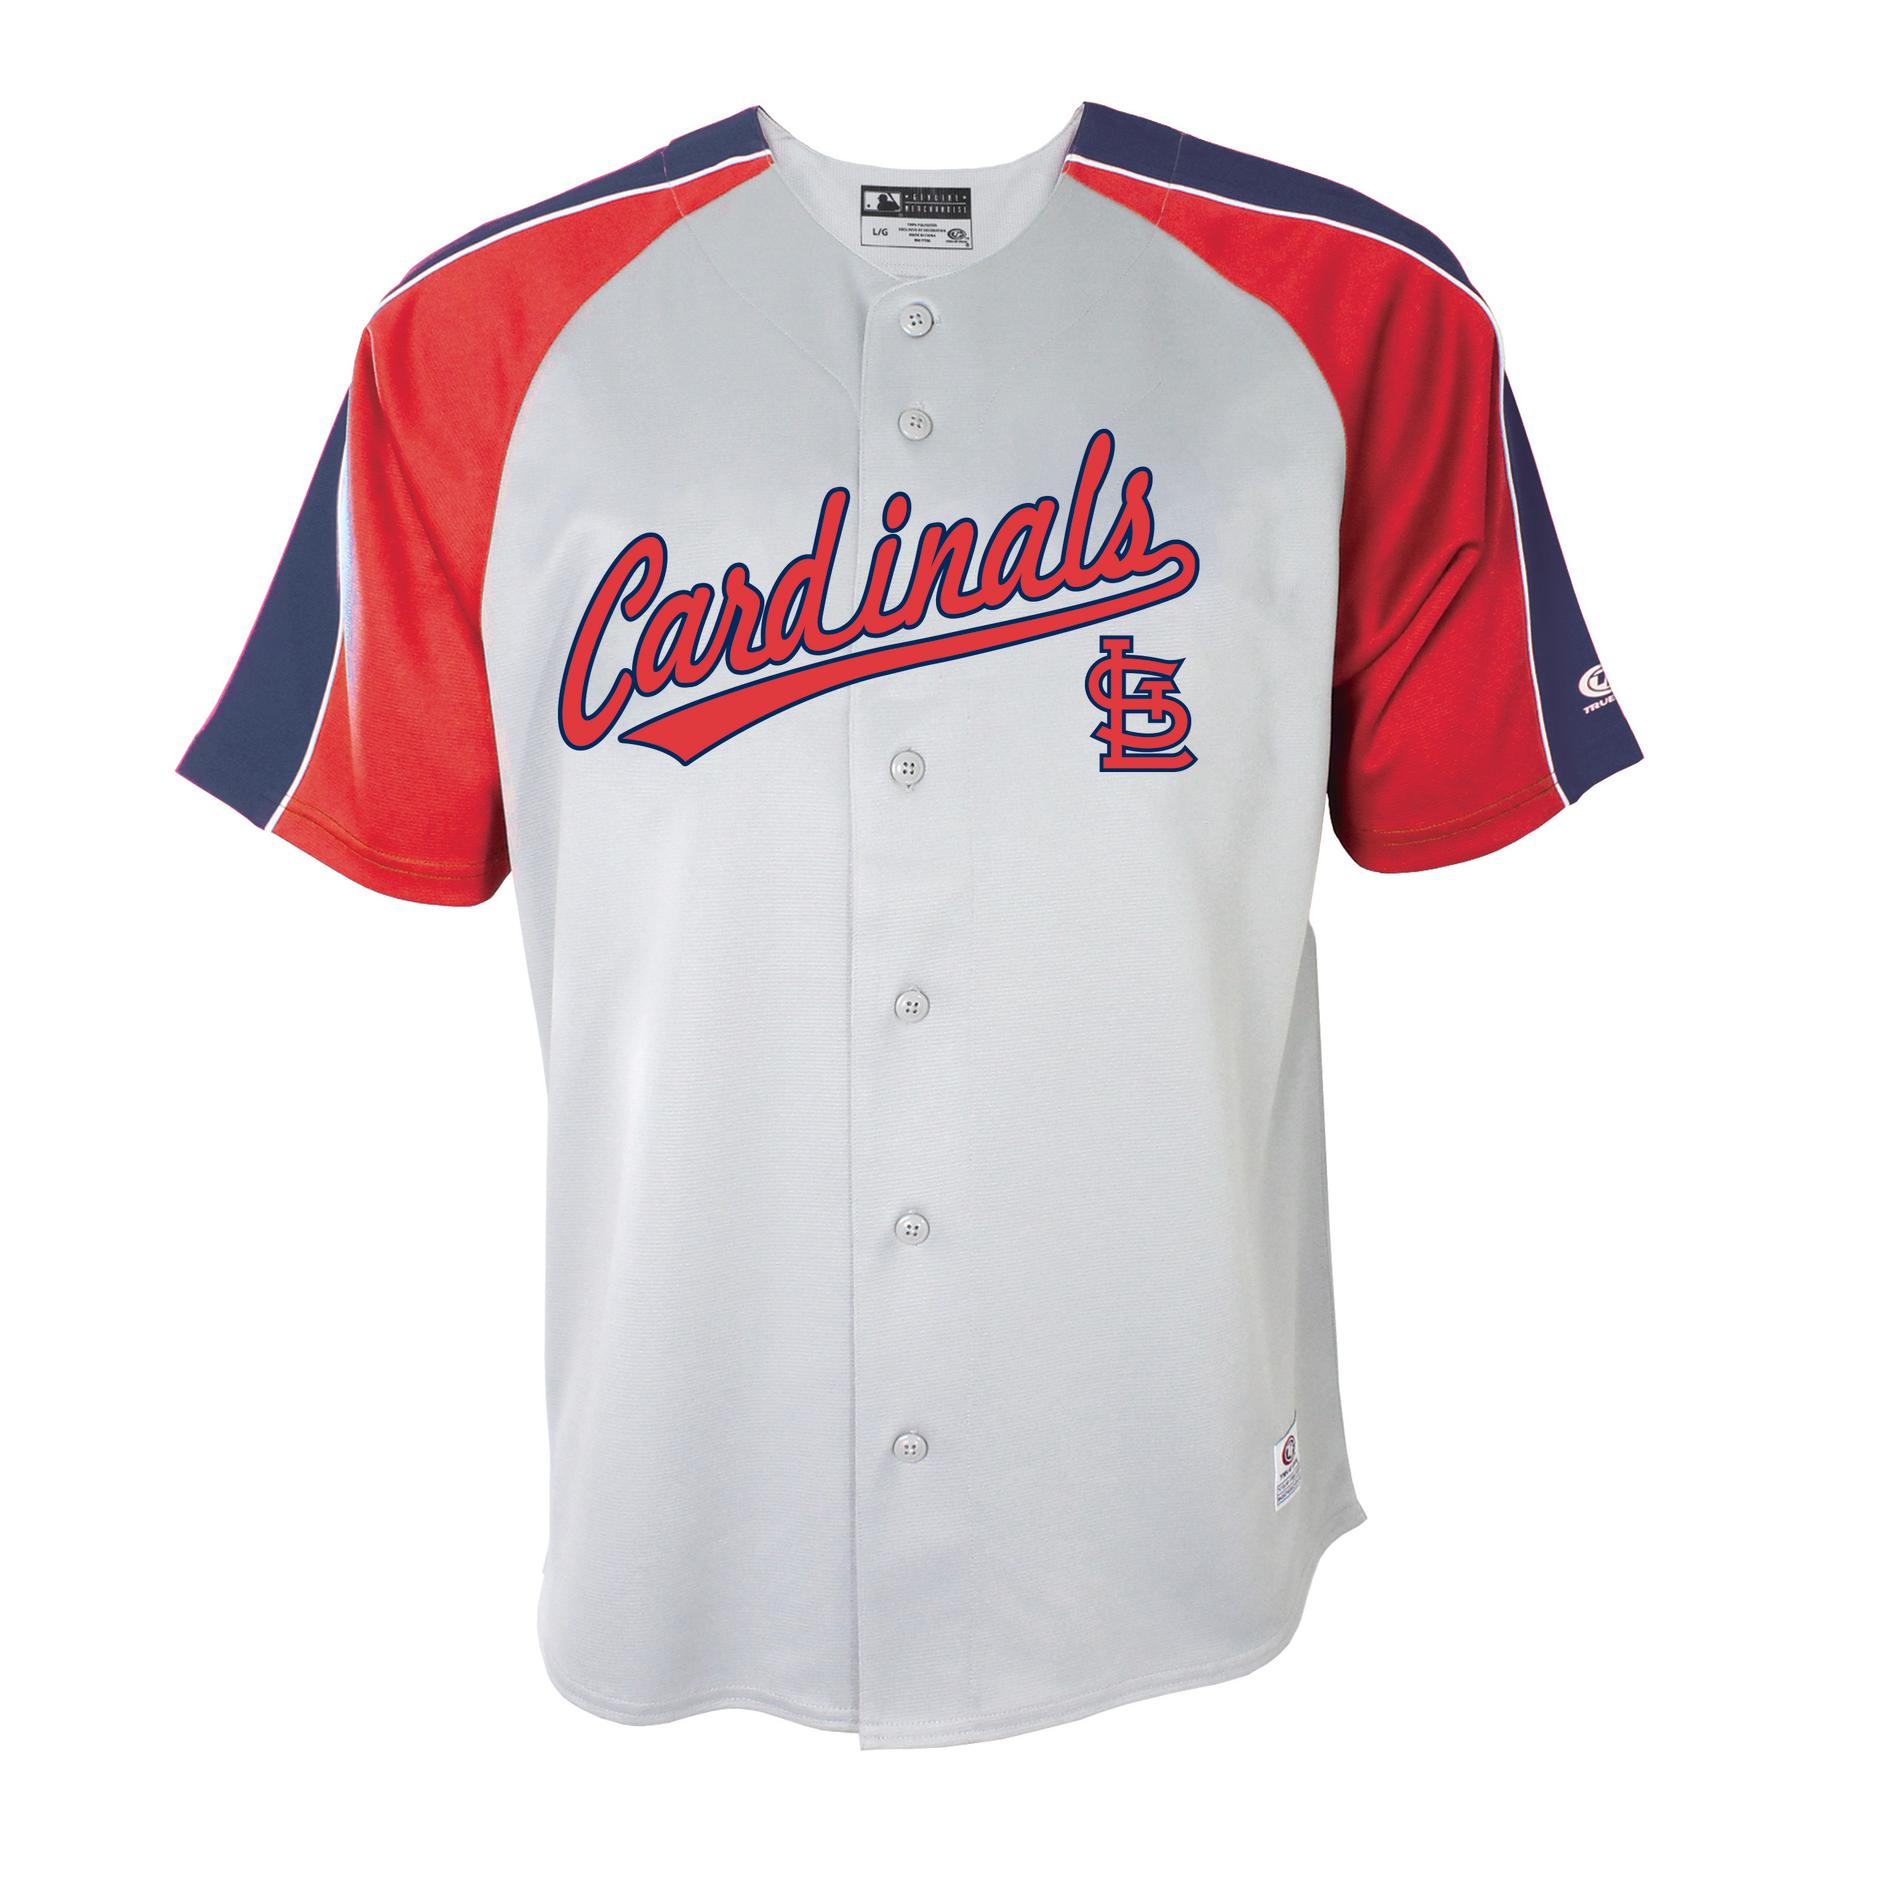 cardinals baseball jerseys